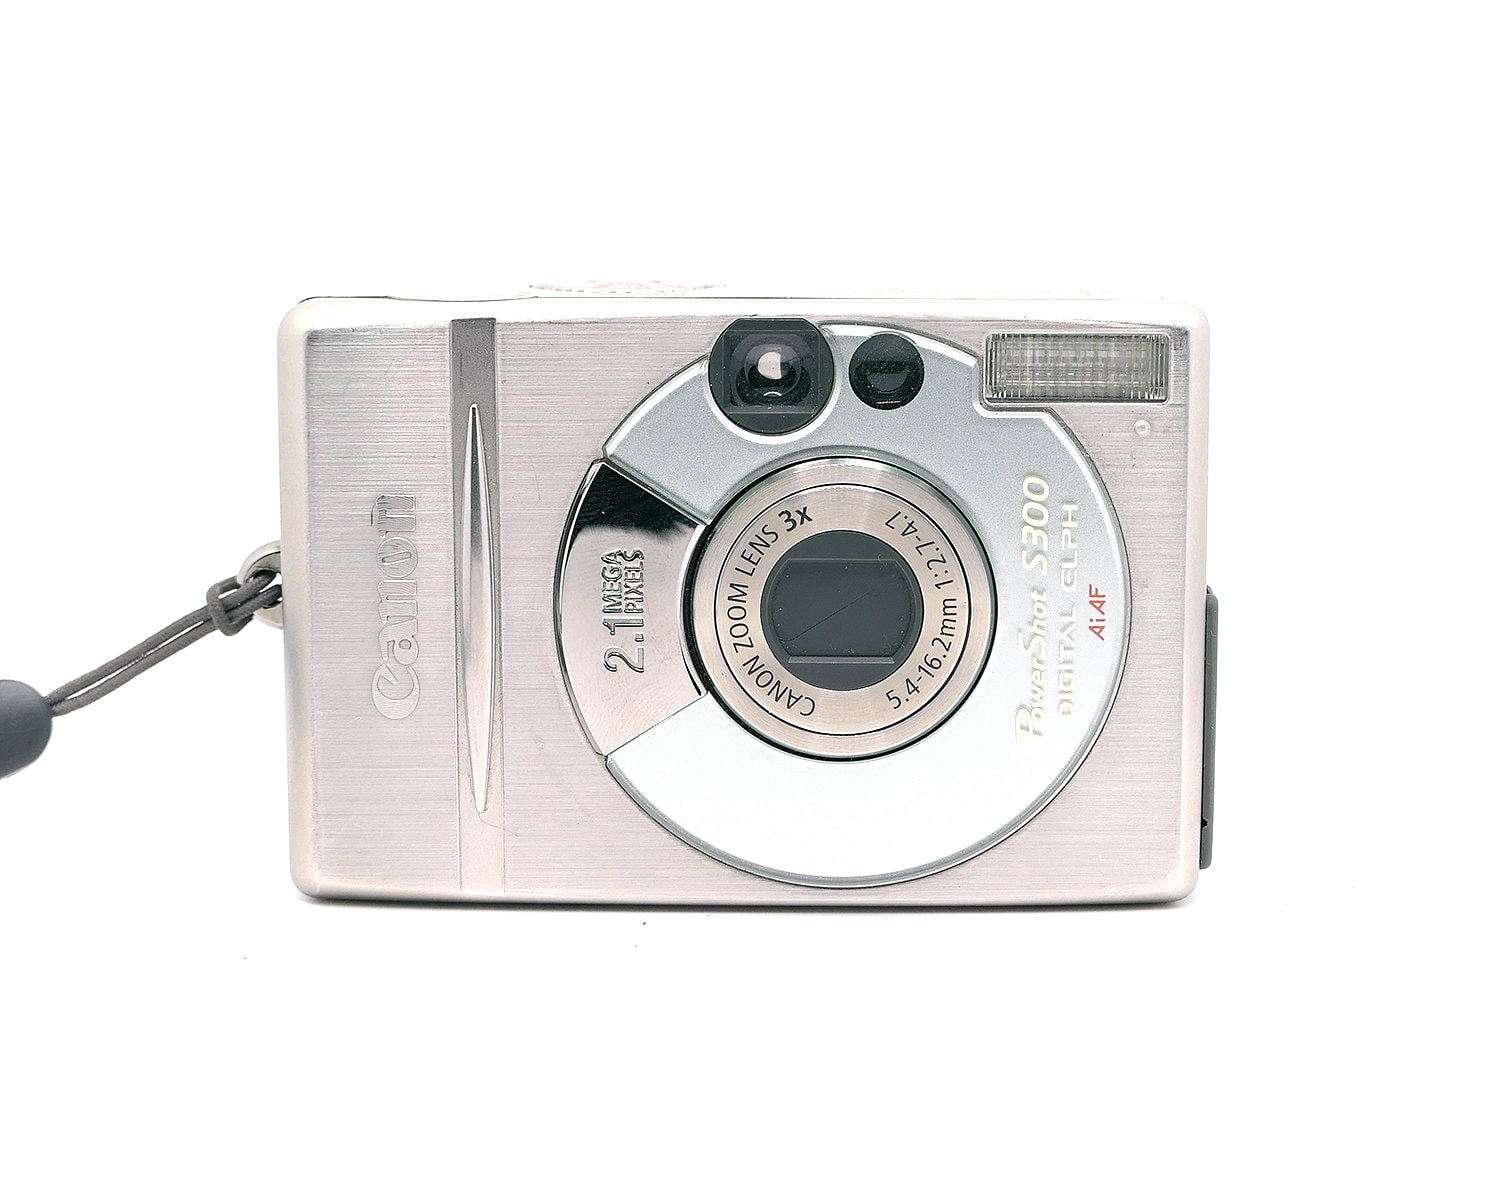 Canon Digital IXUS 300 (S300 Digital ELPH): Digital Photography Review